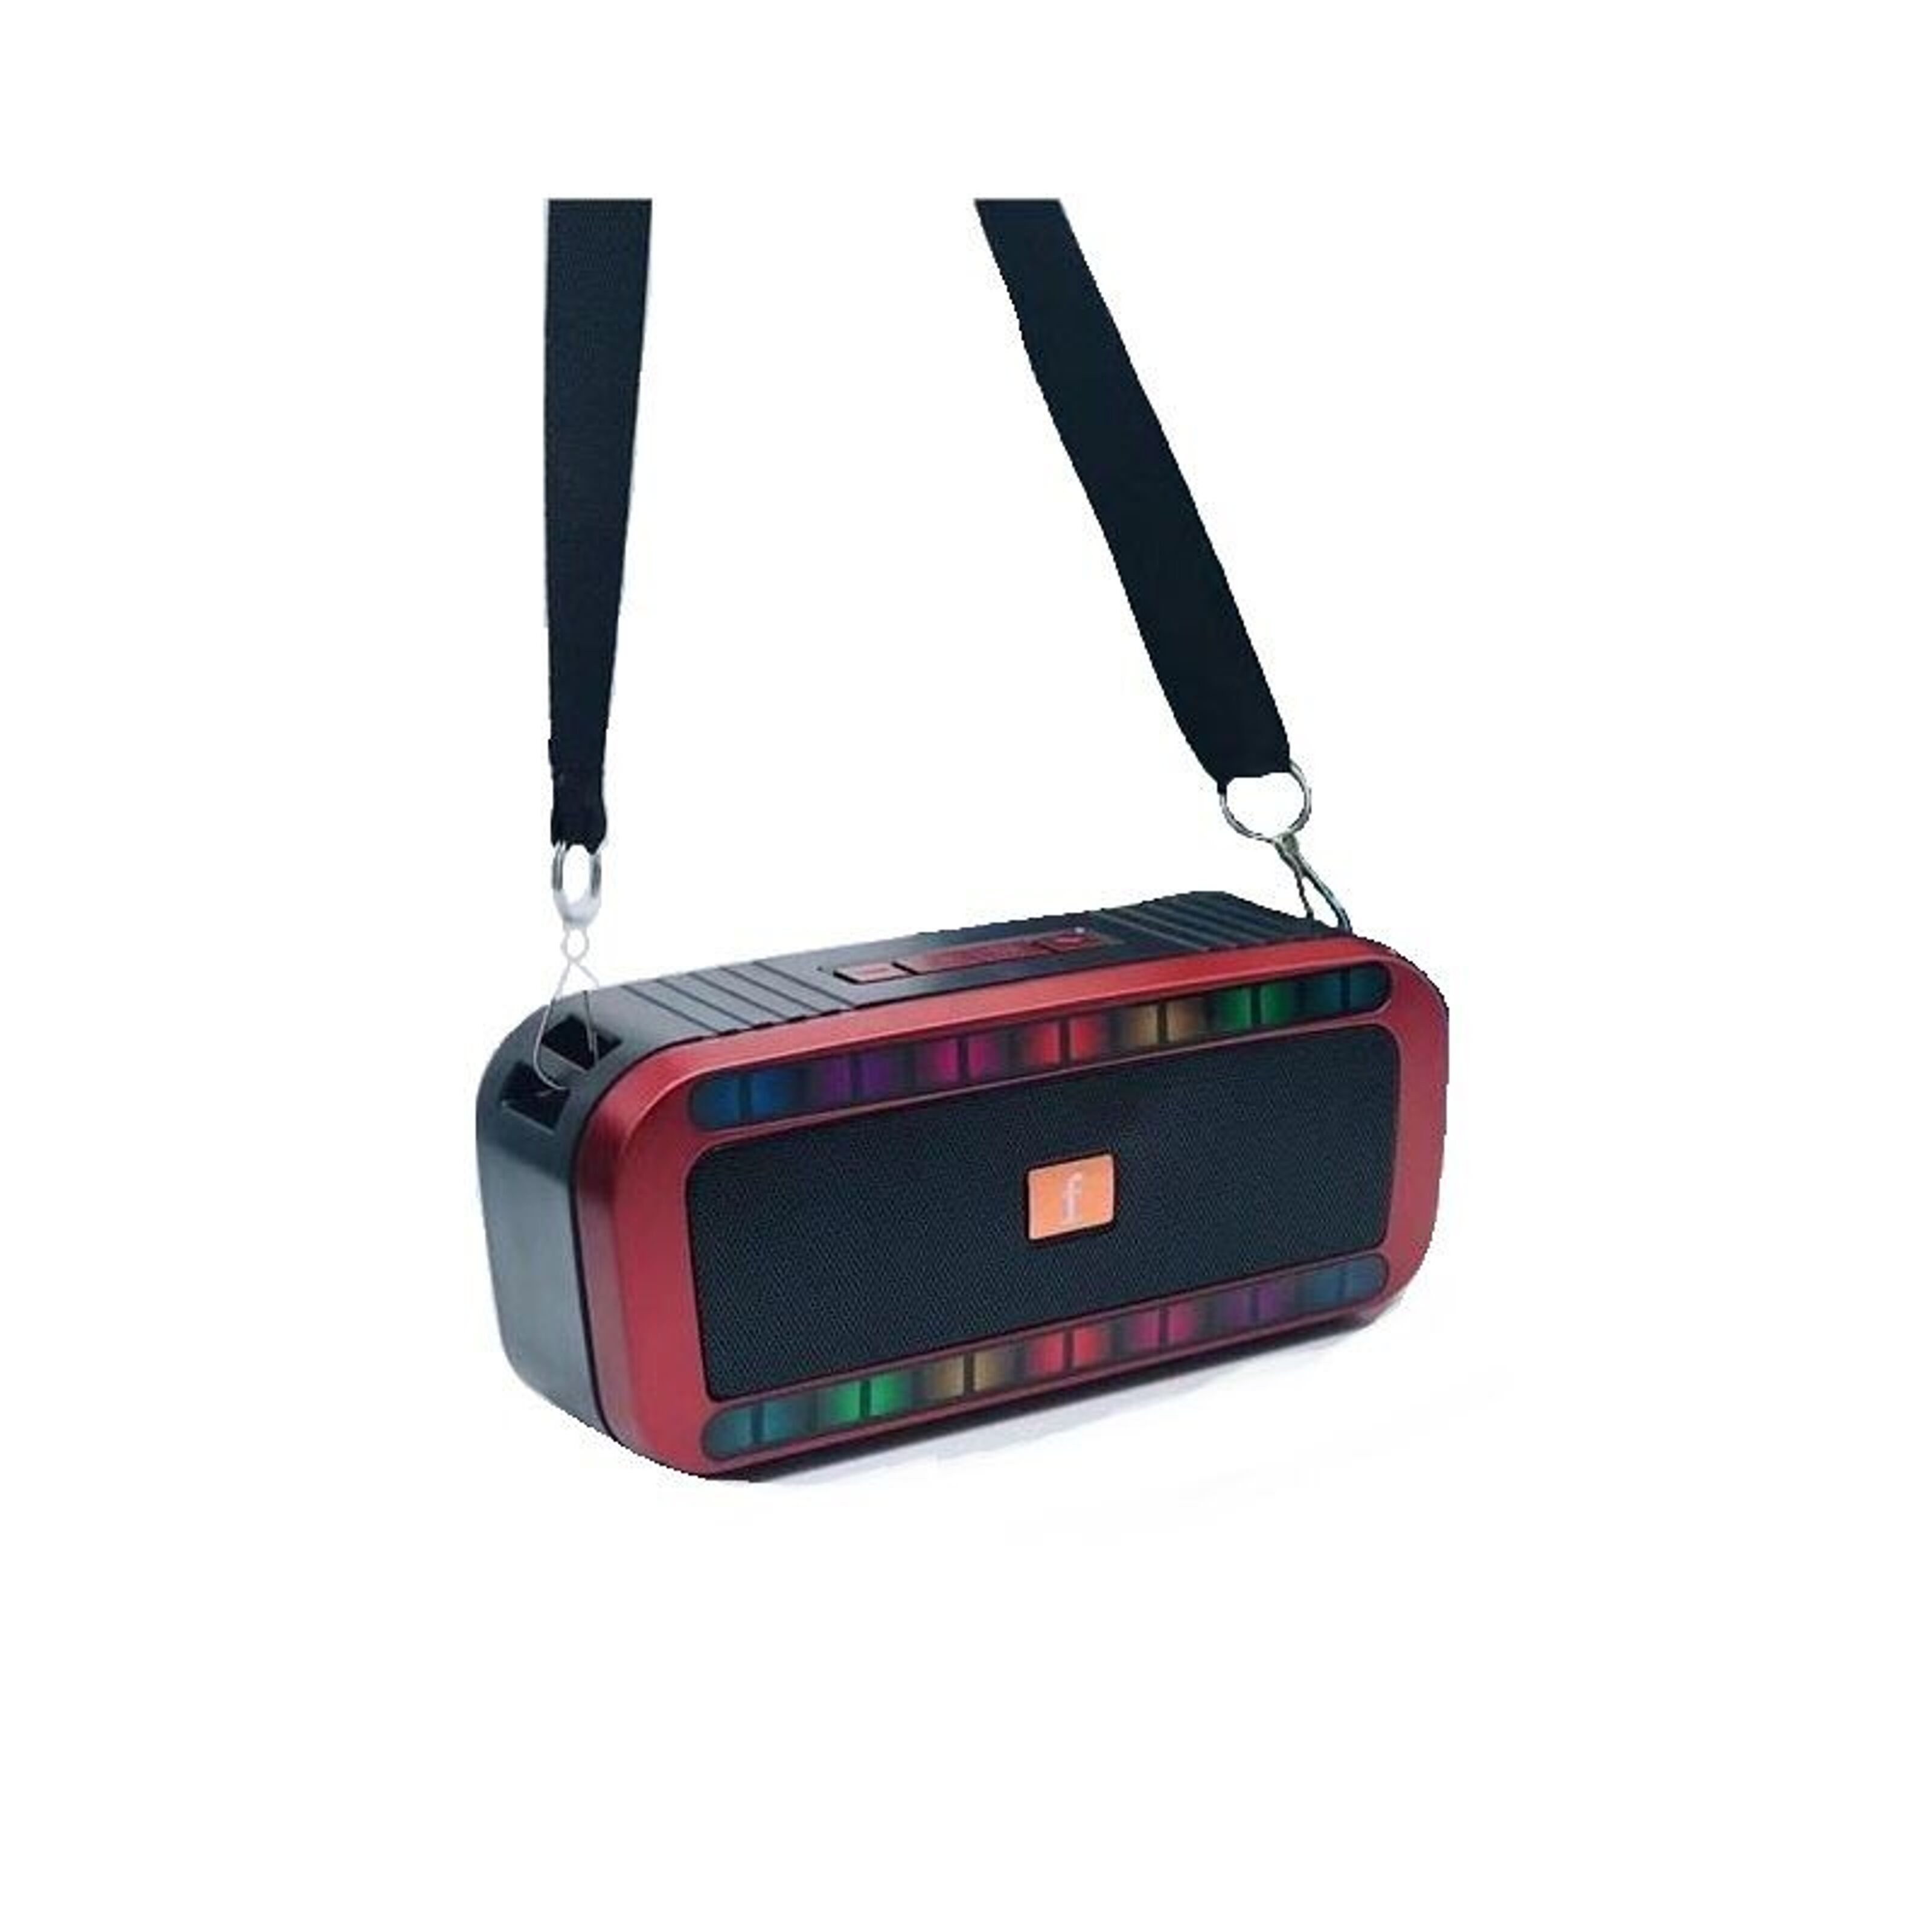 Altavoz inalámbrico - A117 Bluetooth portátil. Lector USB, micro SD, radio  FM y manos libres. Entrada auxiliar jack 3,5mm DAM ELECTRONICS, Bluetooth,  Azul